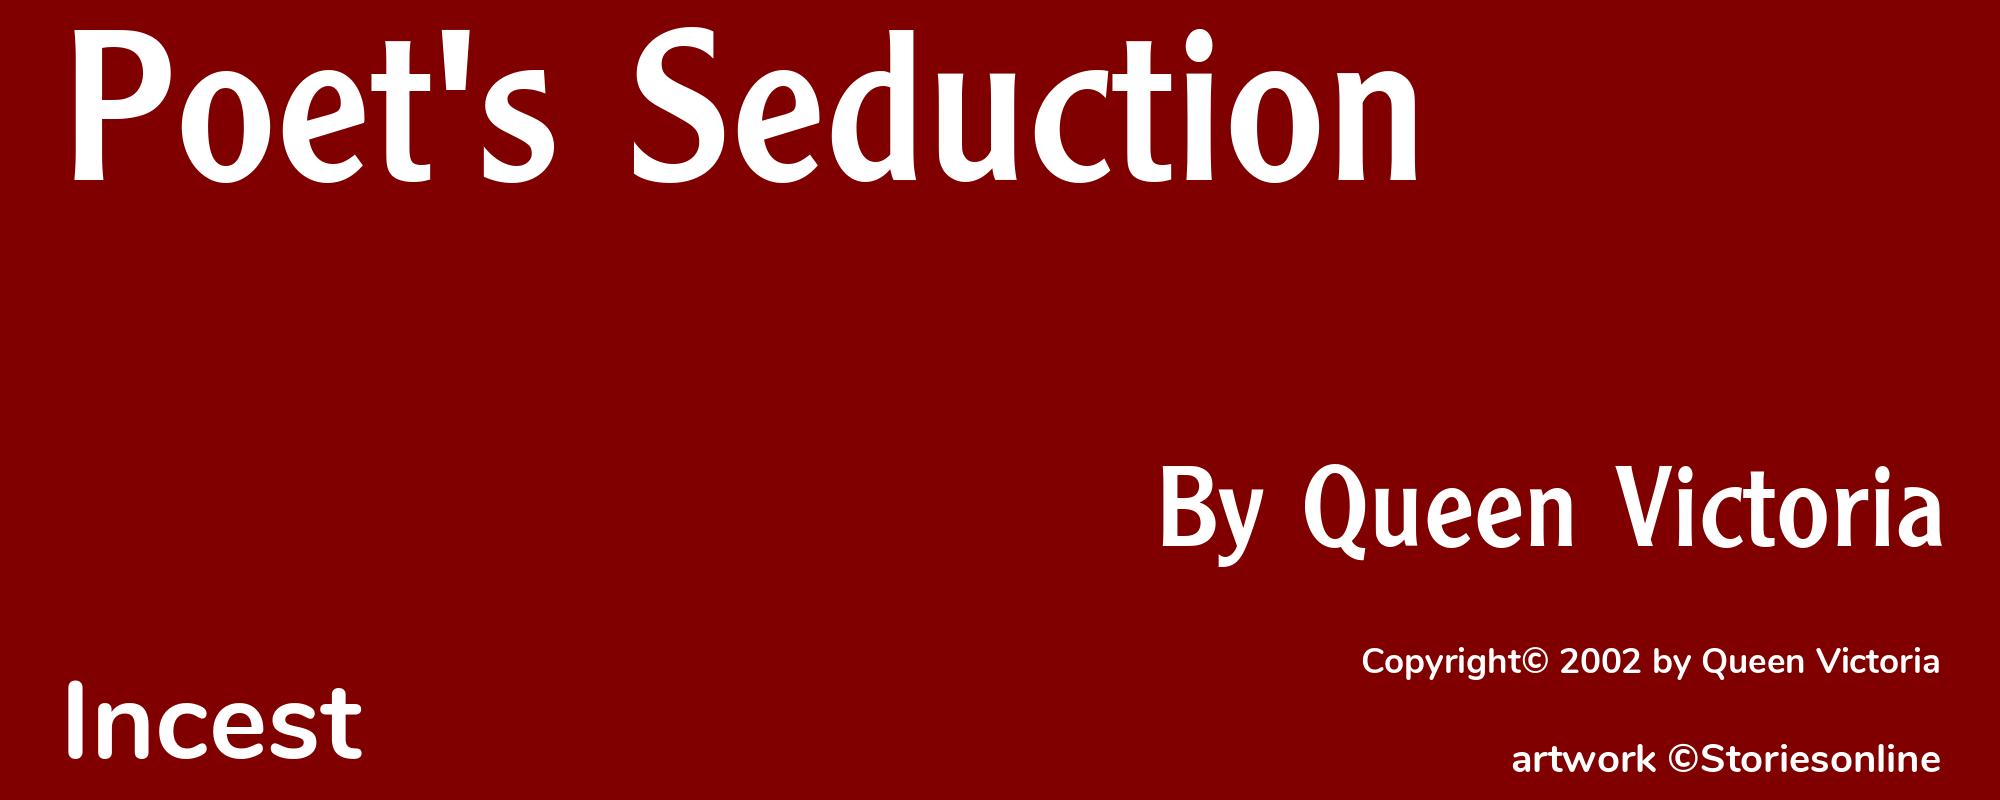 Poet's Seduction - Cover